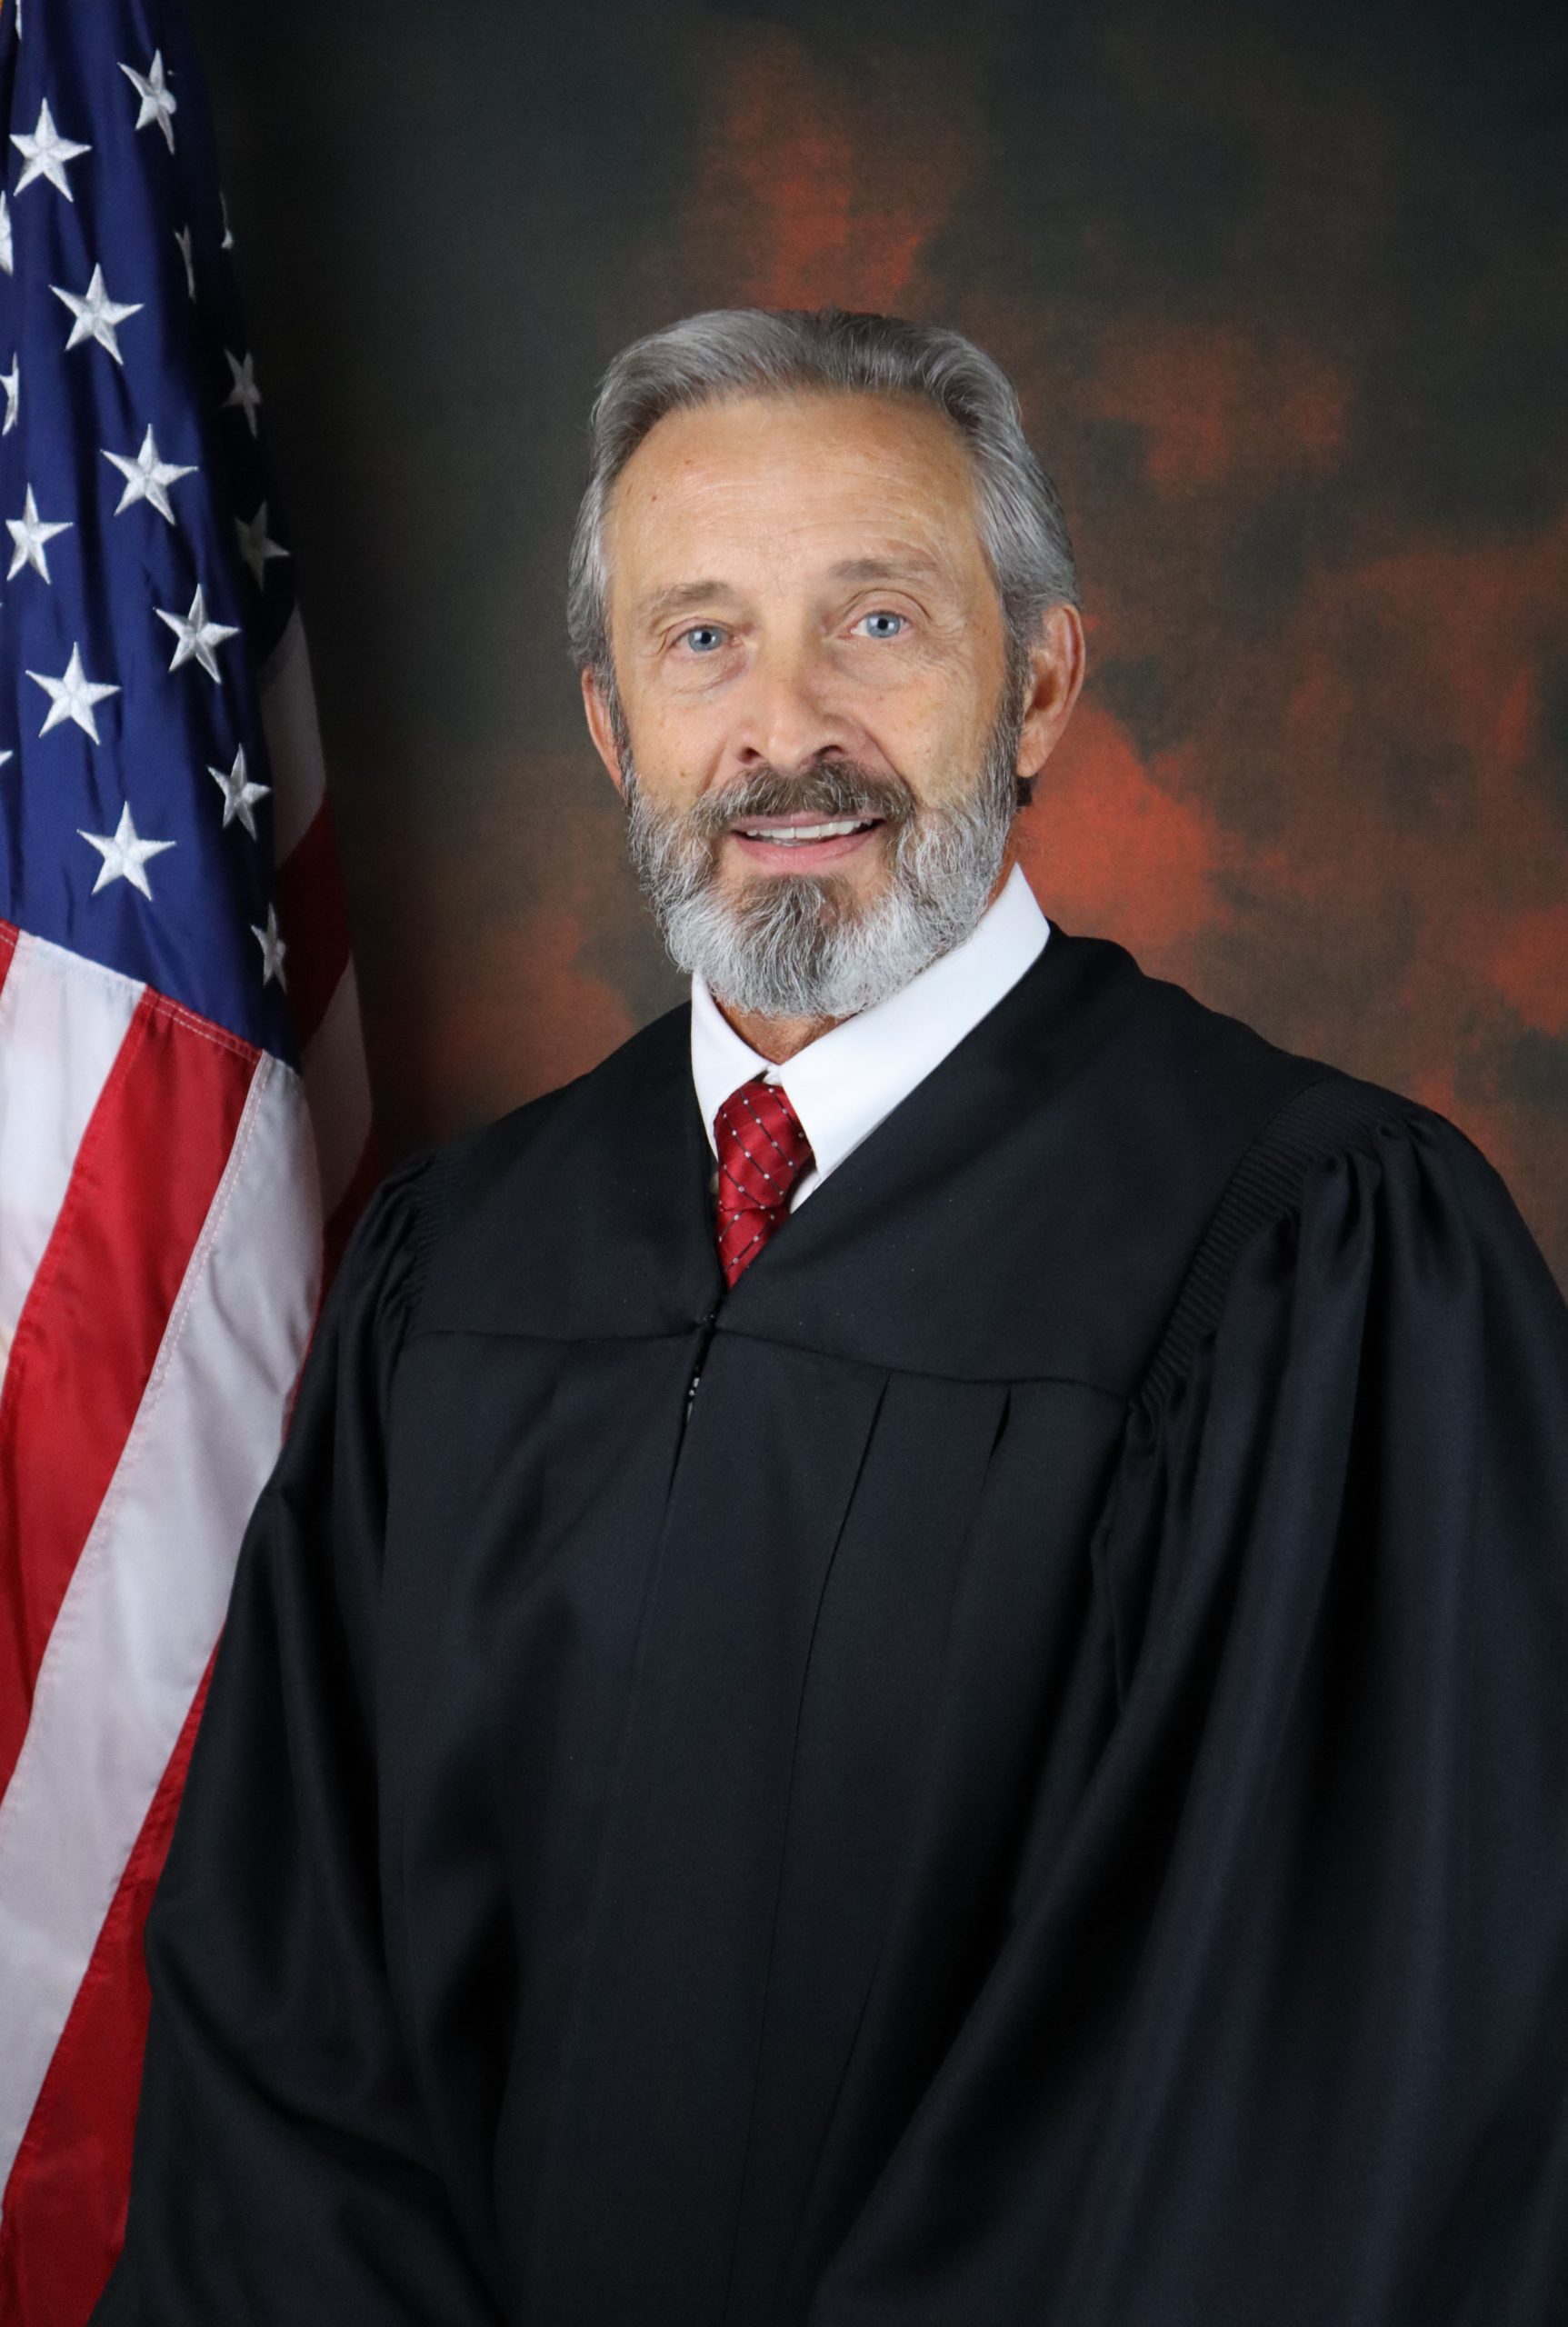 Judge Mosley